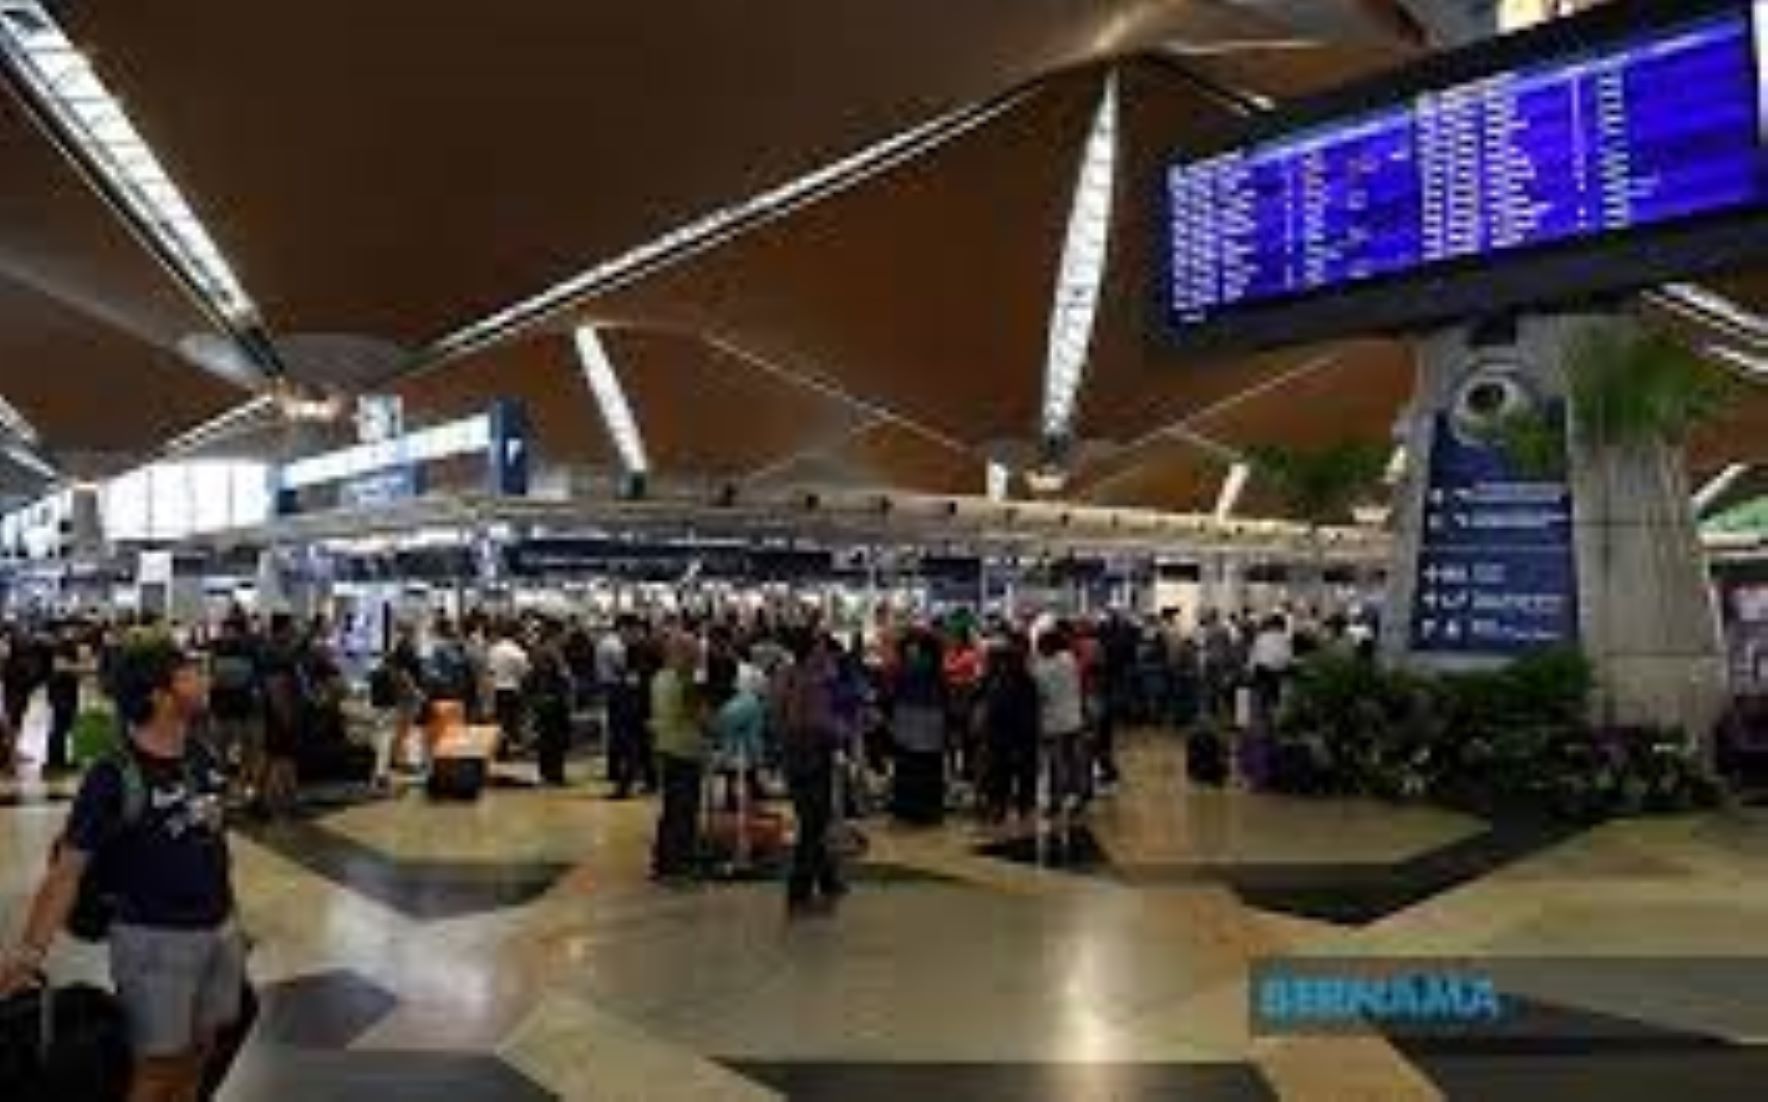 Malaysia Airports’ Passenger Traffic Surpassed 100 Million Last Year